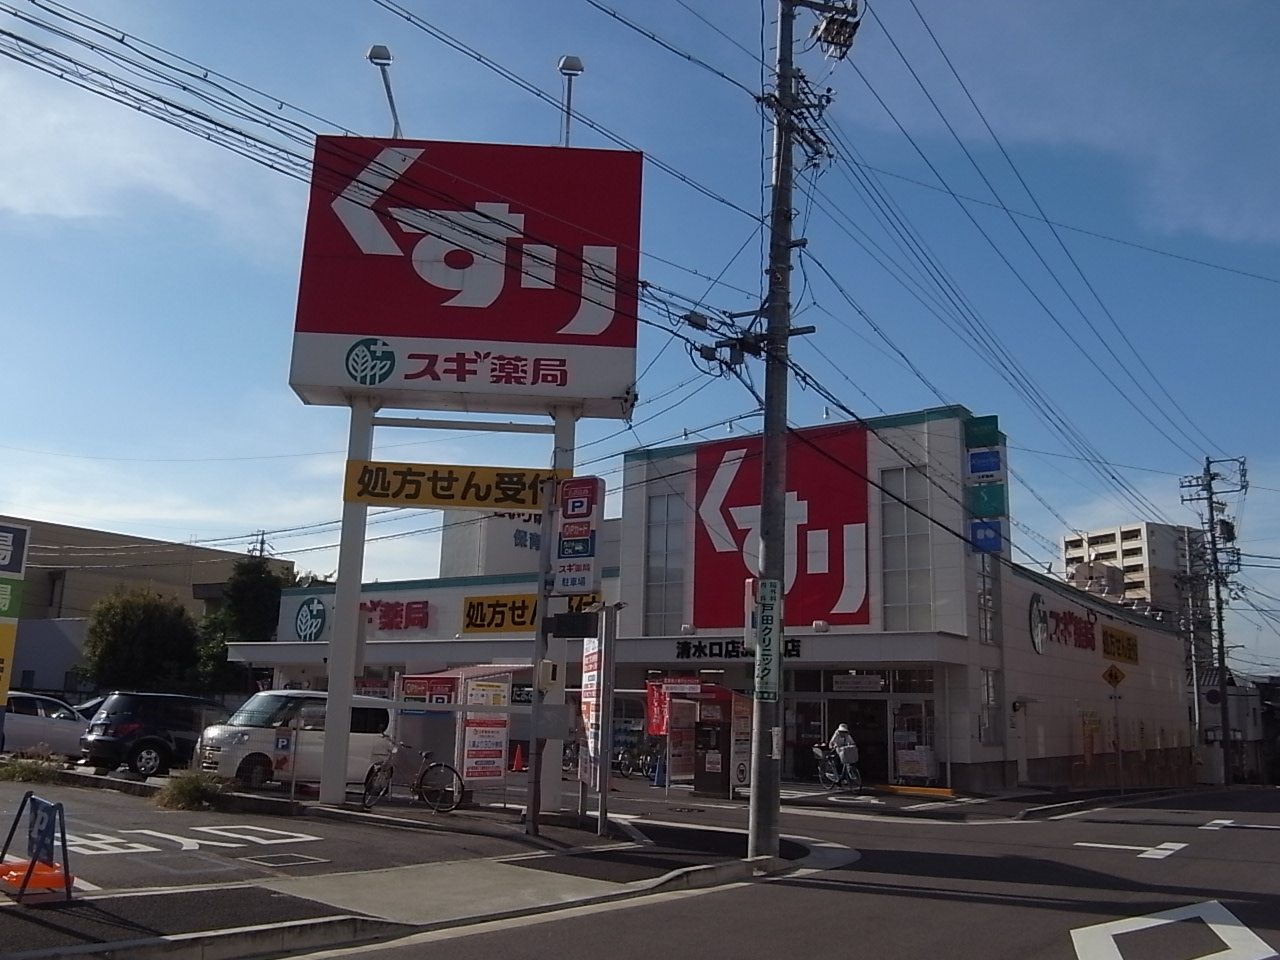 Dorakkusutoa. Cedar pharmacy Shimizuguchi shop 675m until (drugstore)